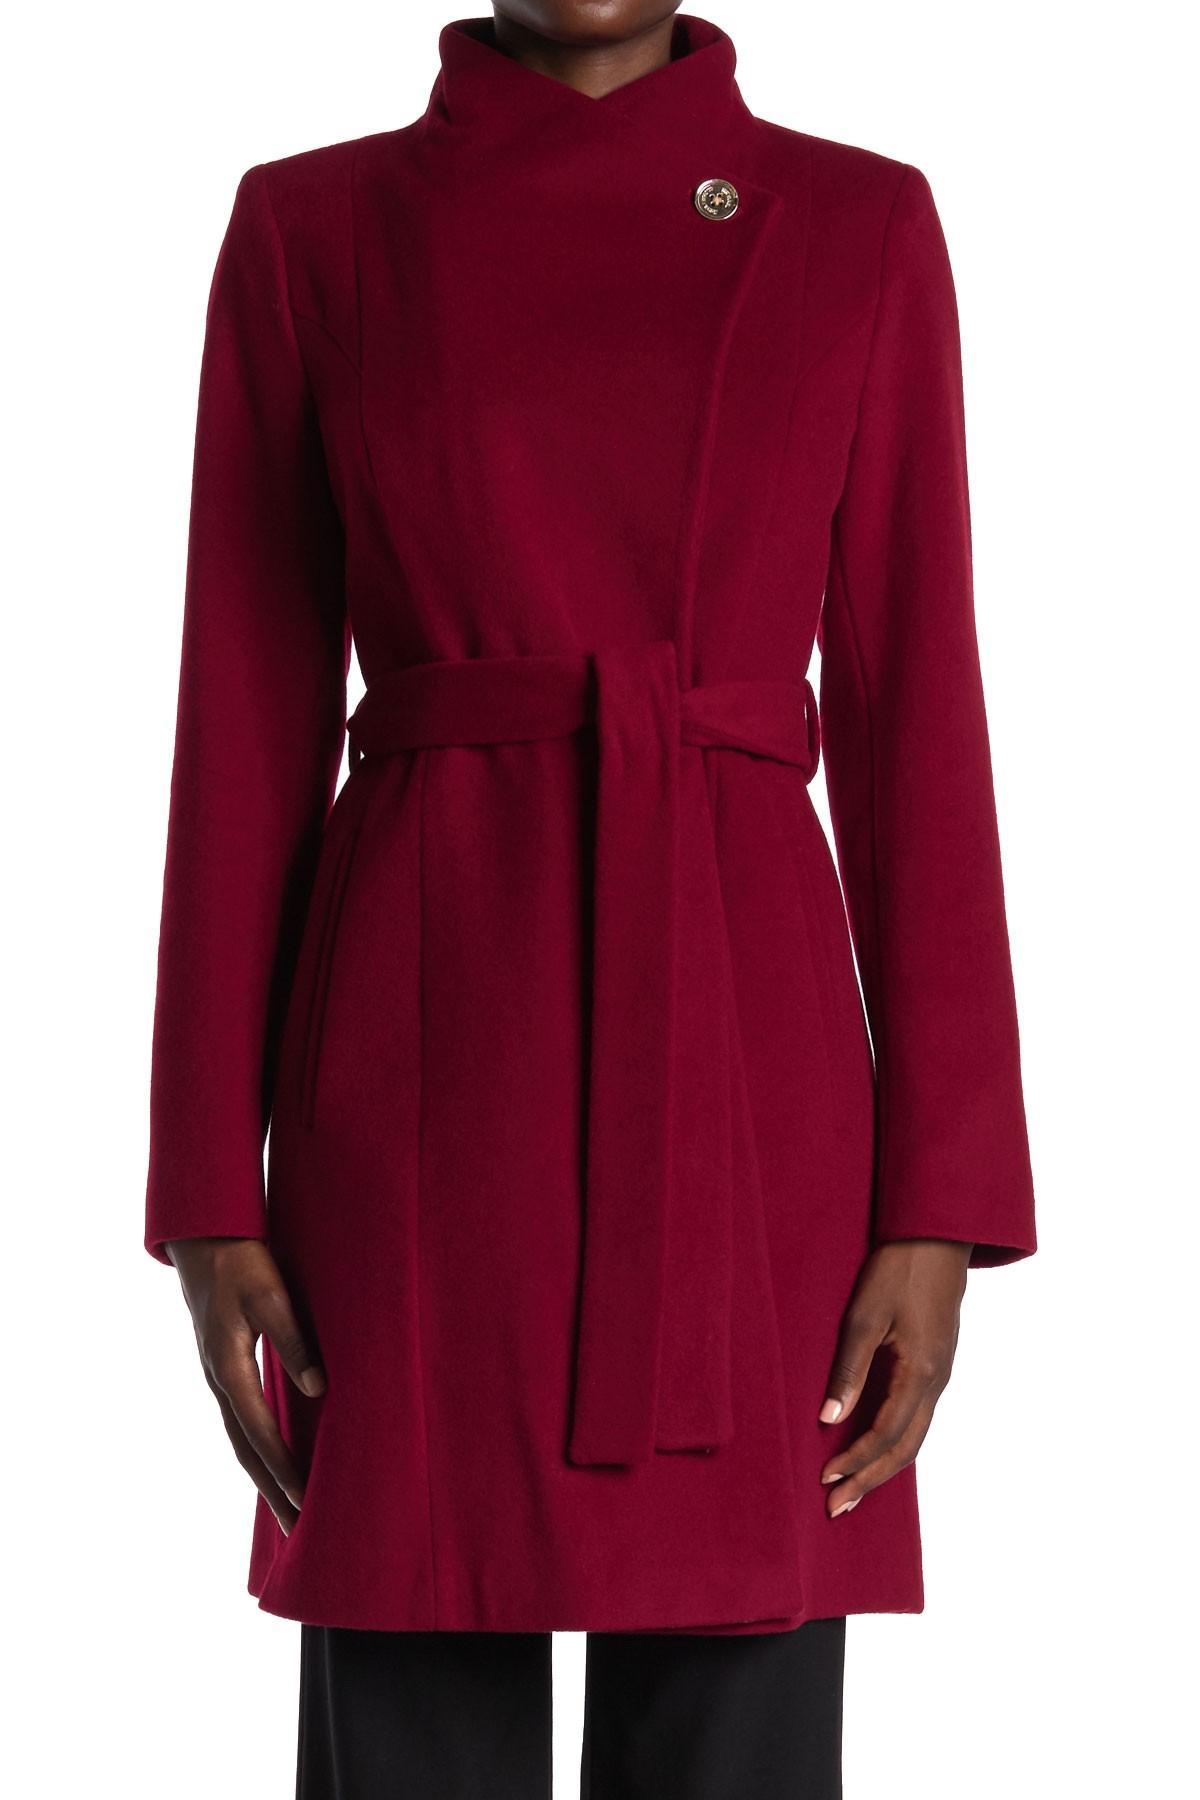 Michael Kors Missy Asymmetrical Belted Wool Blend Coat in Red - Lyst